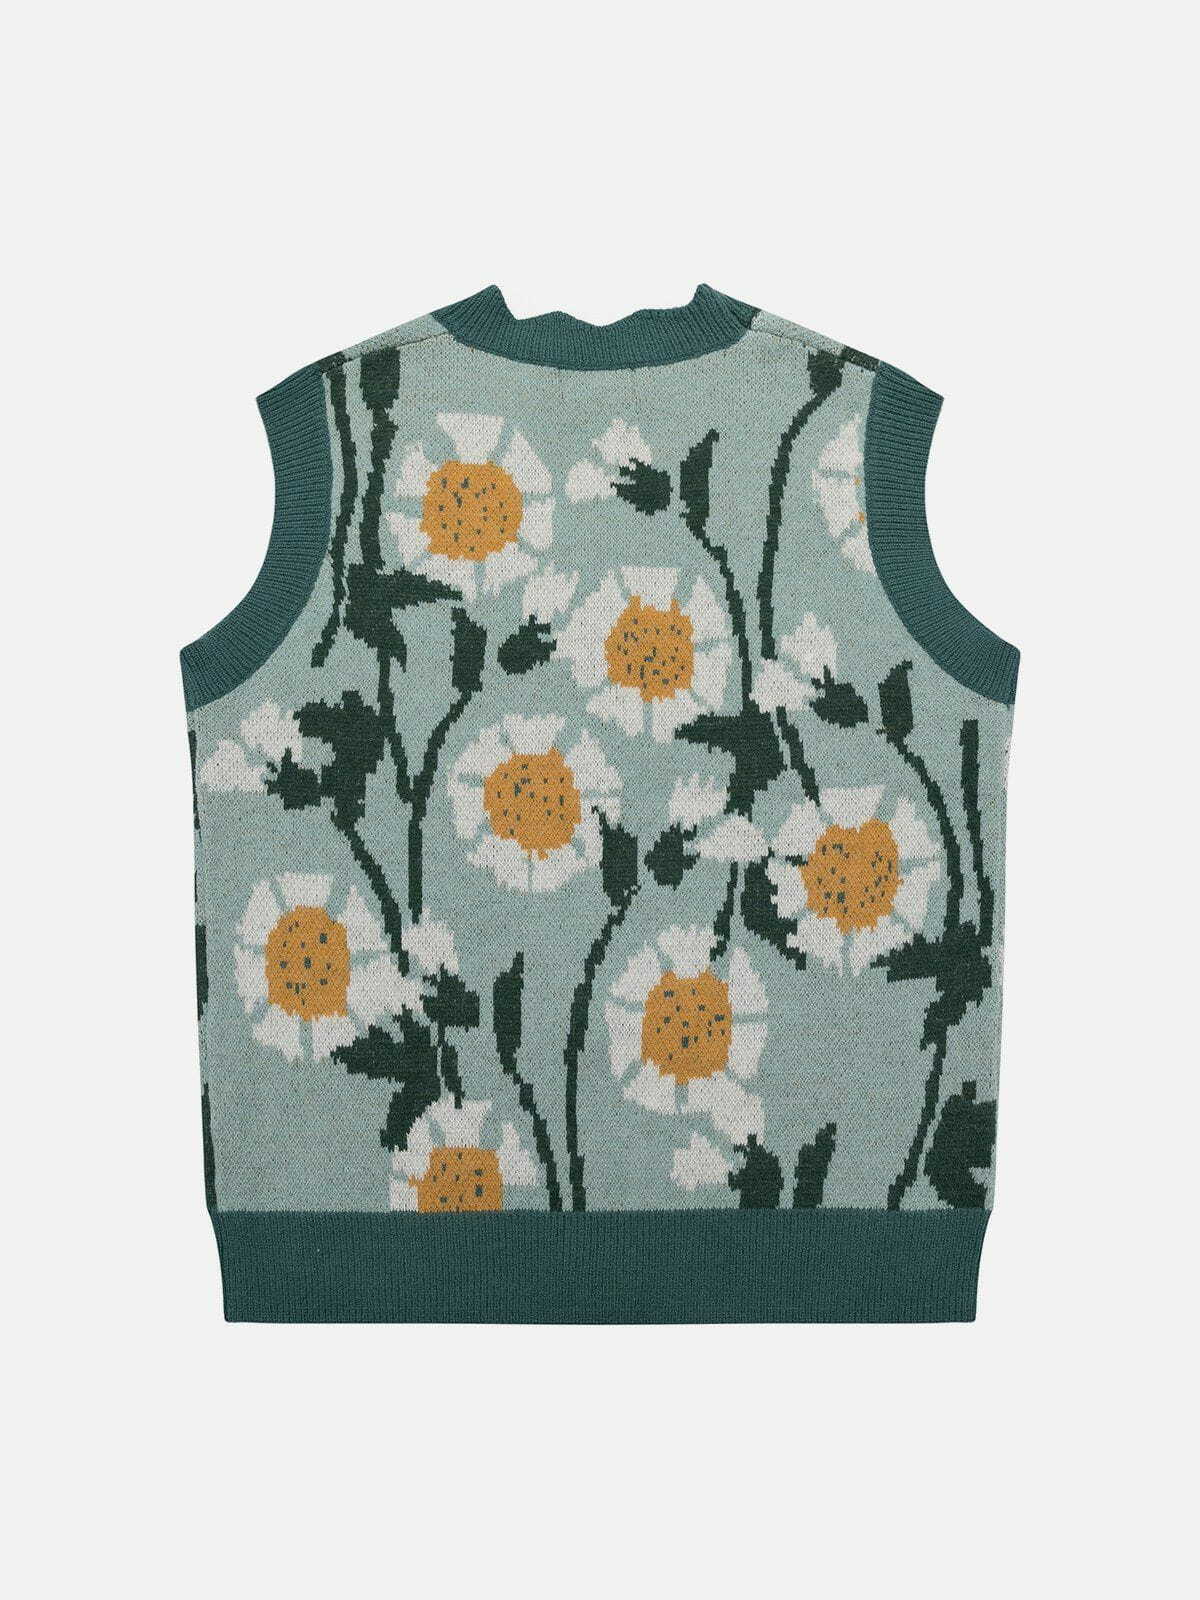 vintage sunflowers sweater vest retro chic y2k fashion essential 8398